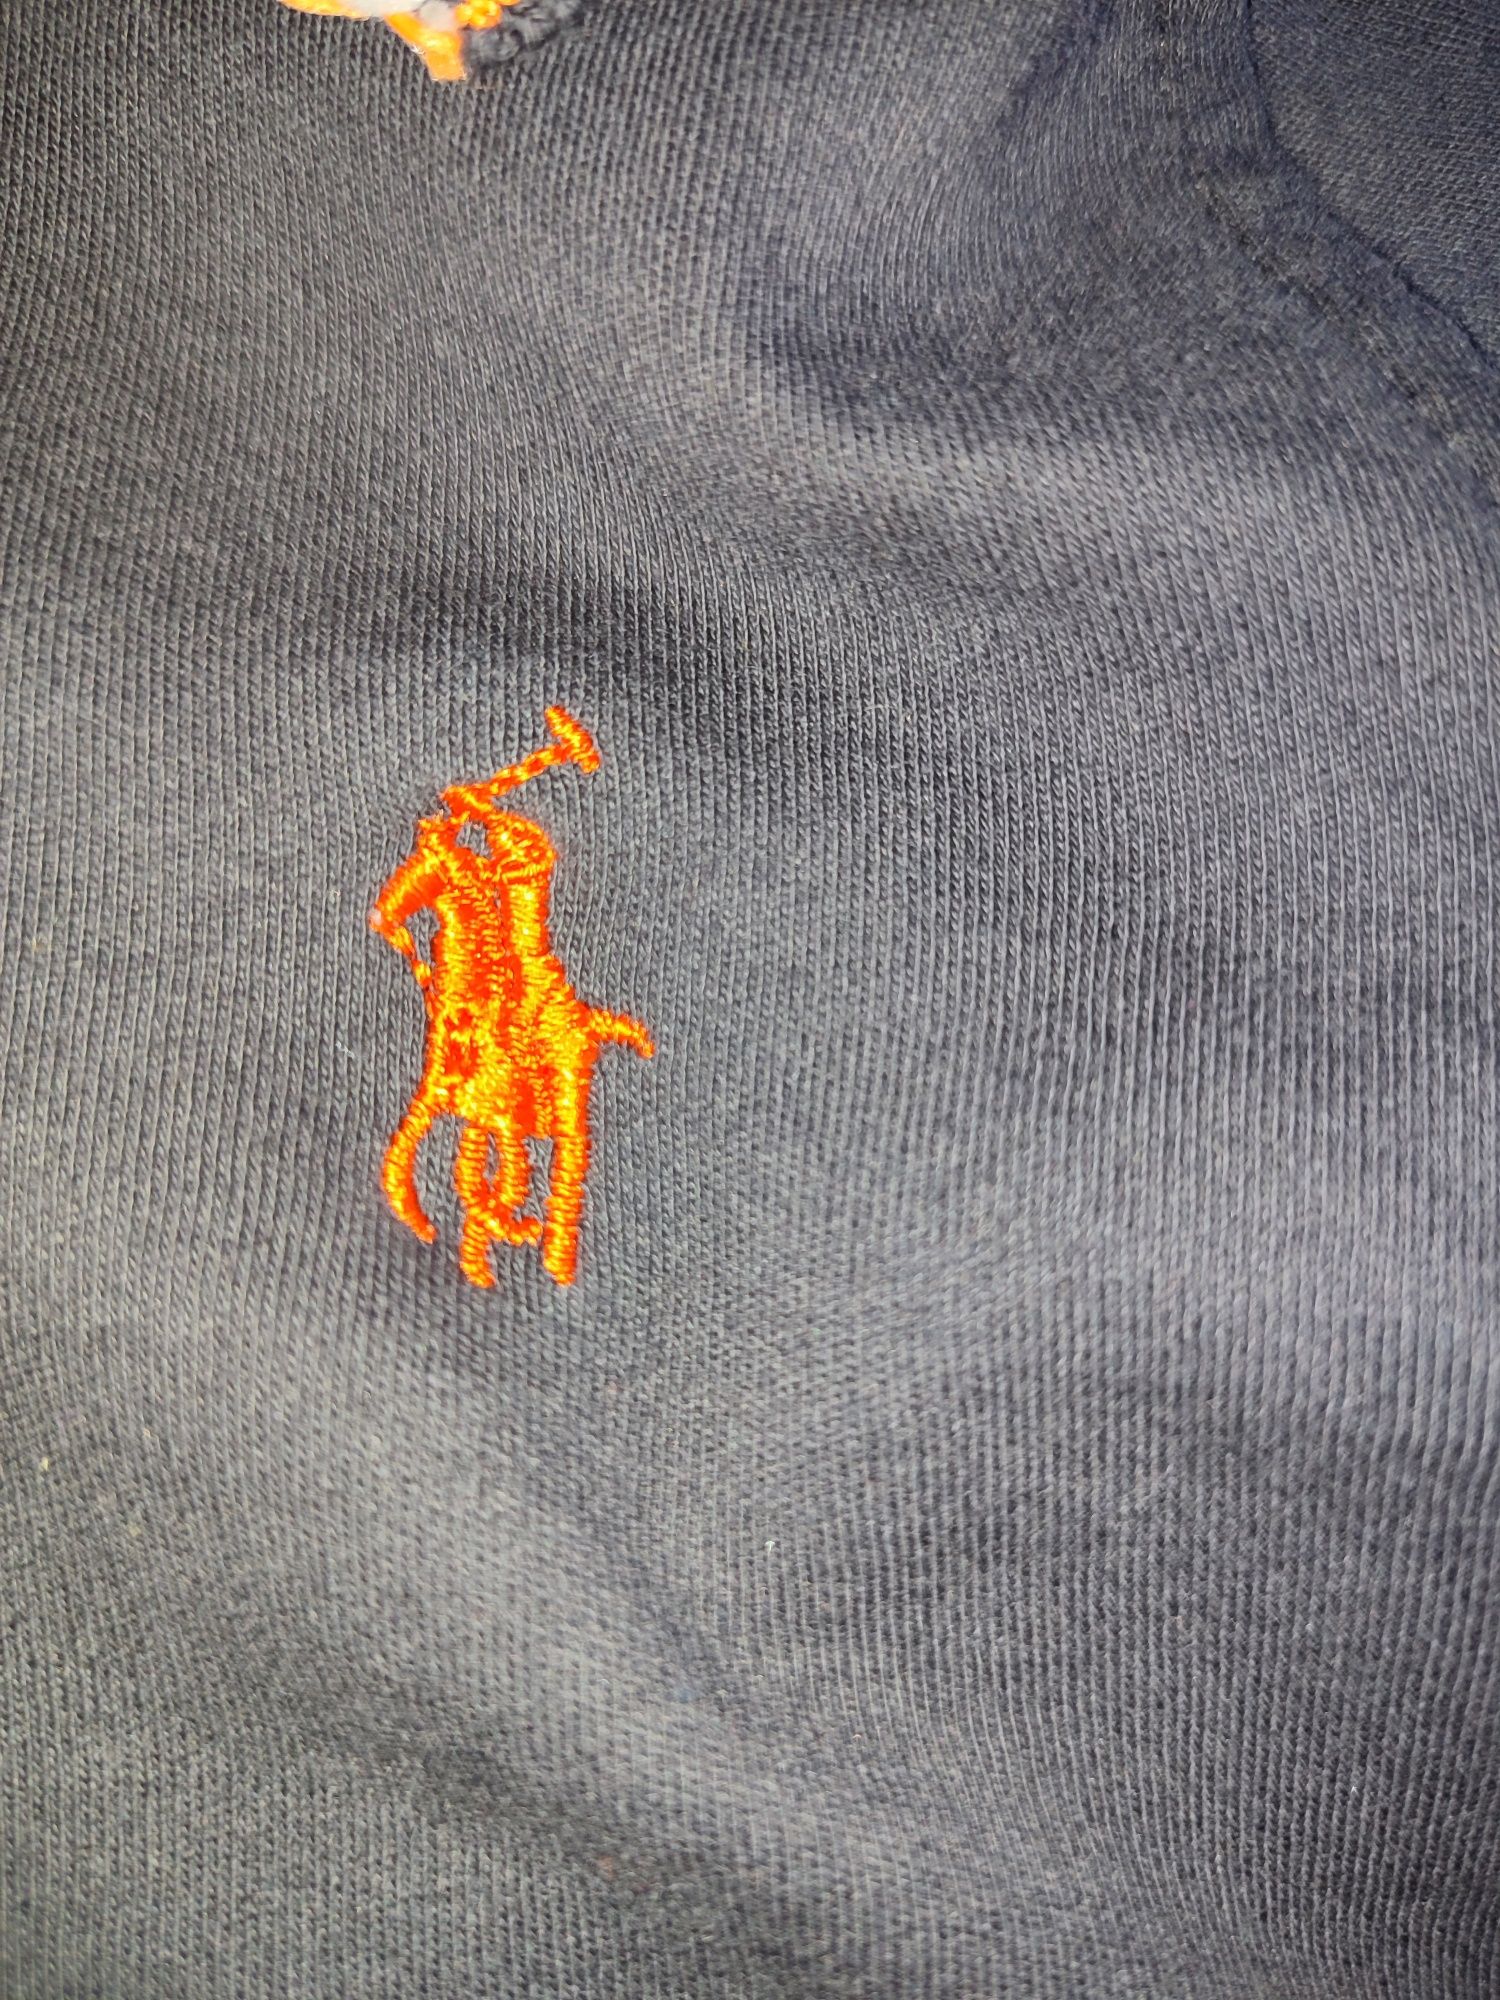 Polo chłopięca t-shirt koszulka Ralph Lauren r.92 oryginalna chłopięca